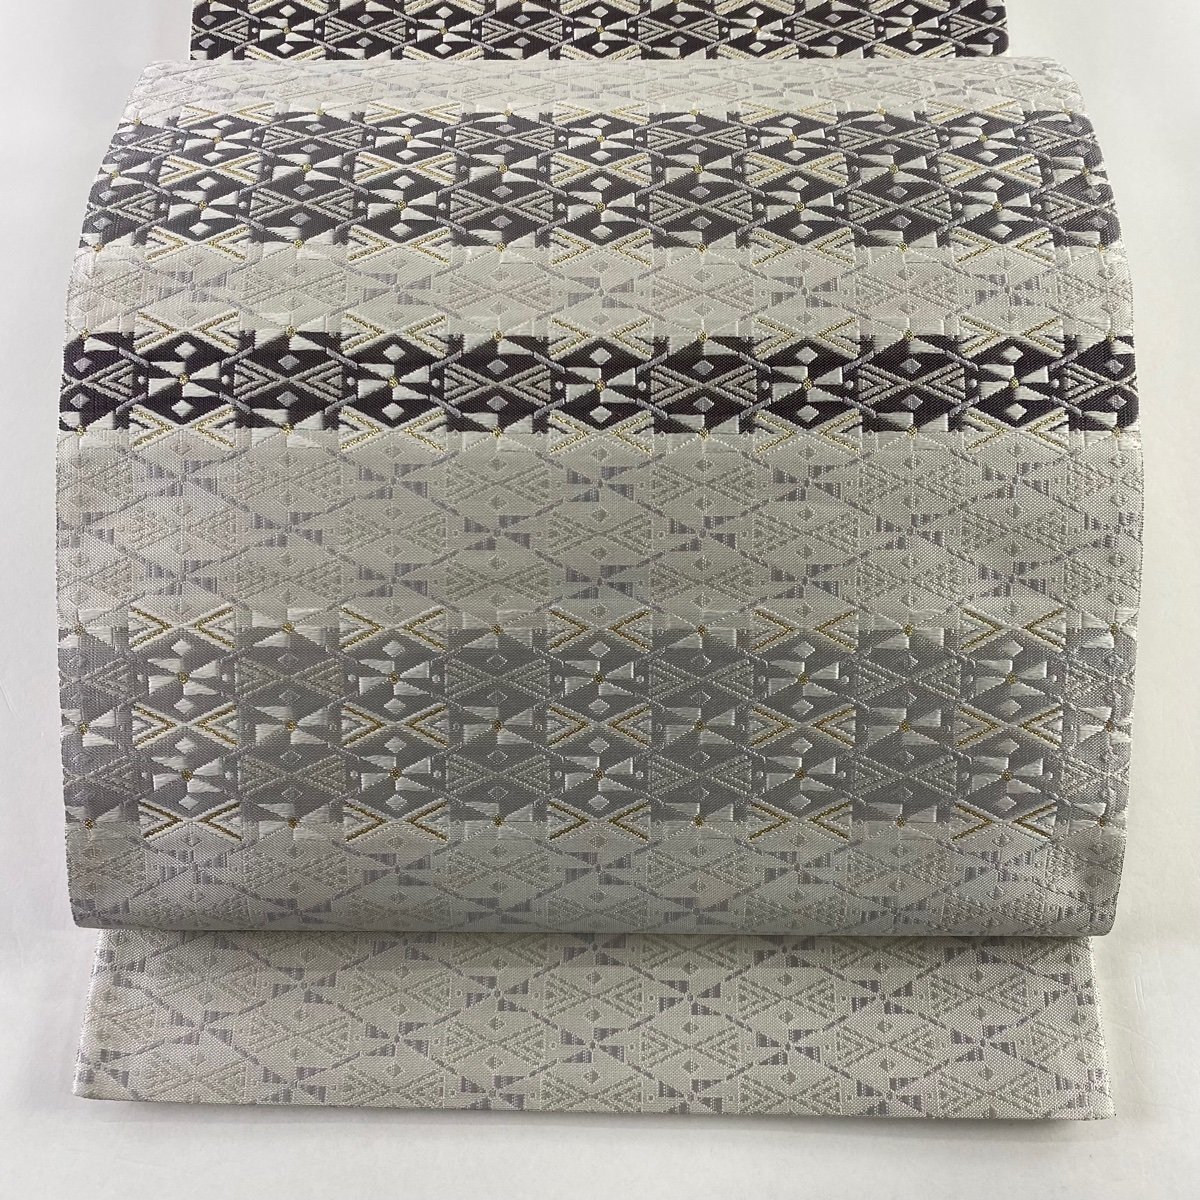 日本製 袋帯 名品 幾何学 箔 灰紫 六通 正絹 【中古】 仕立て上がり